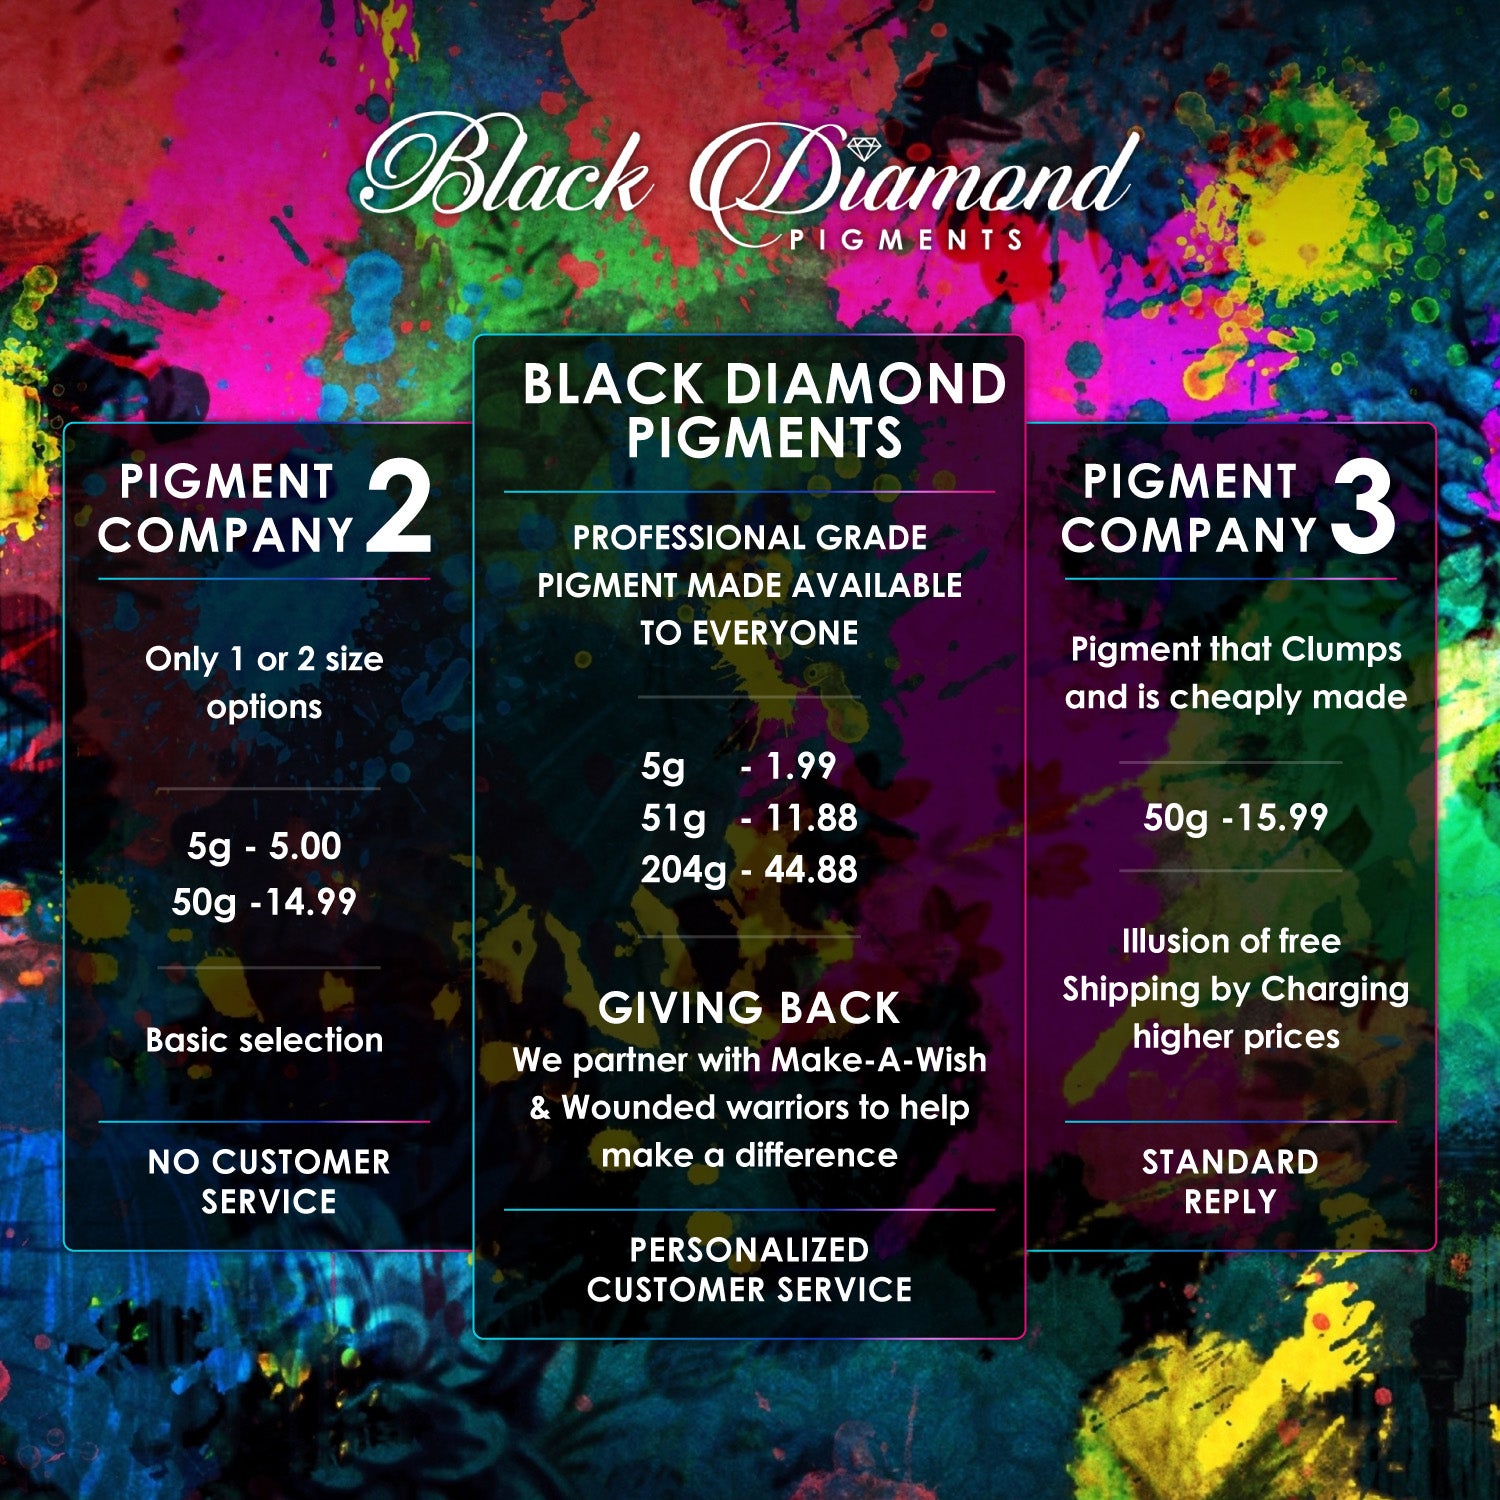 "BLACK ONYX" Black Diamond Pigments